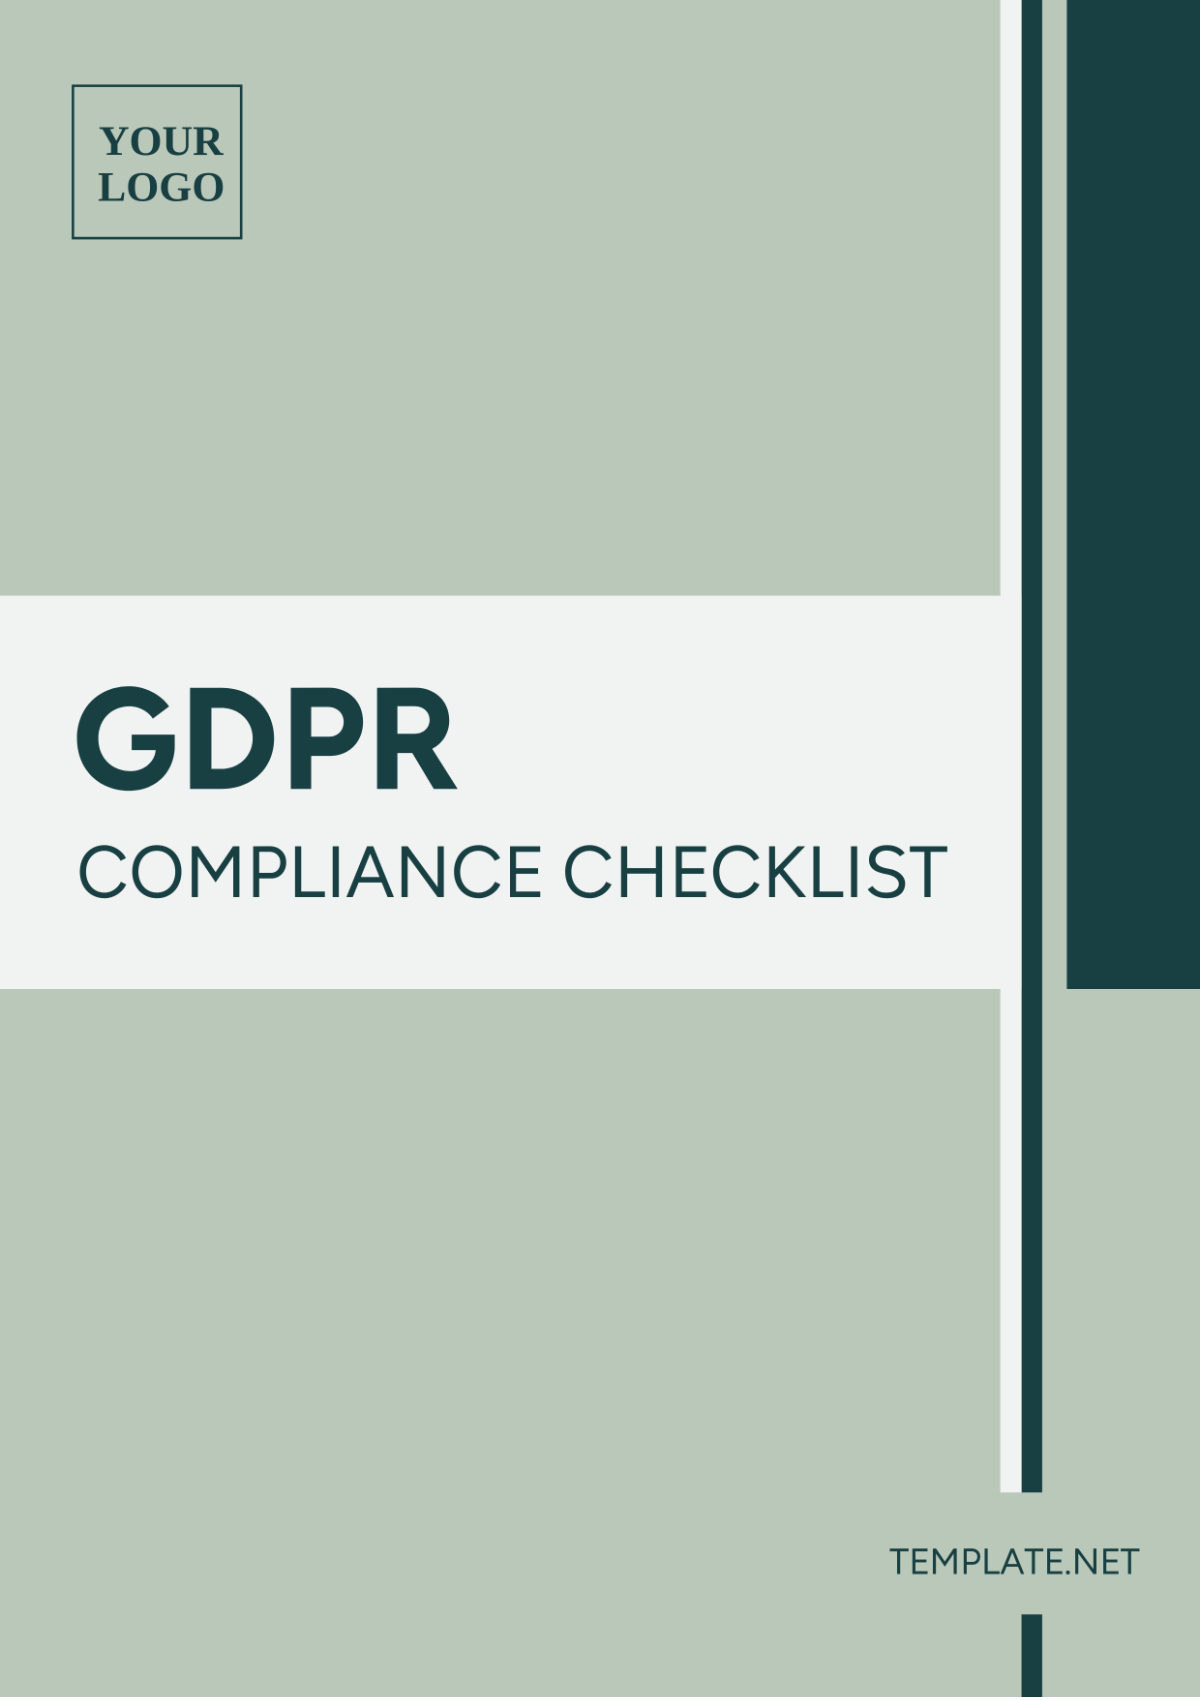 GDPR Compliance Checklist Template